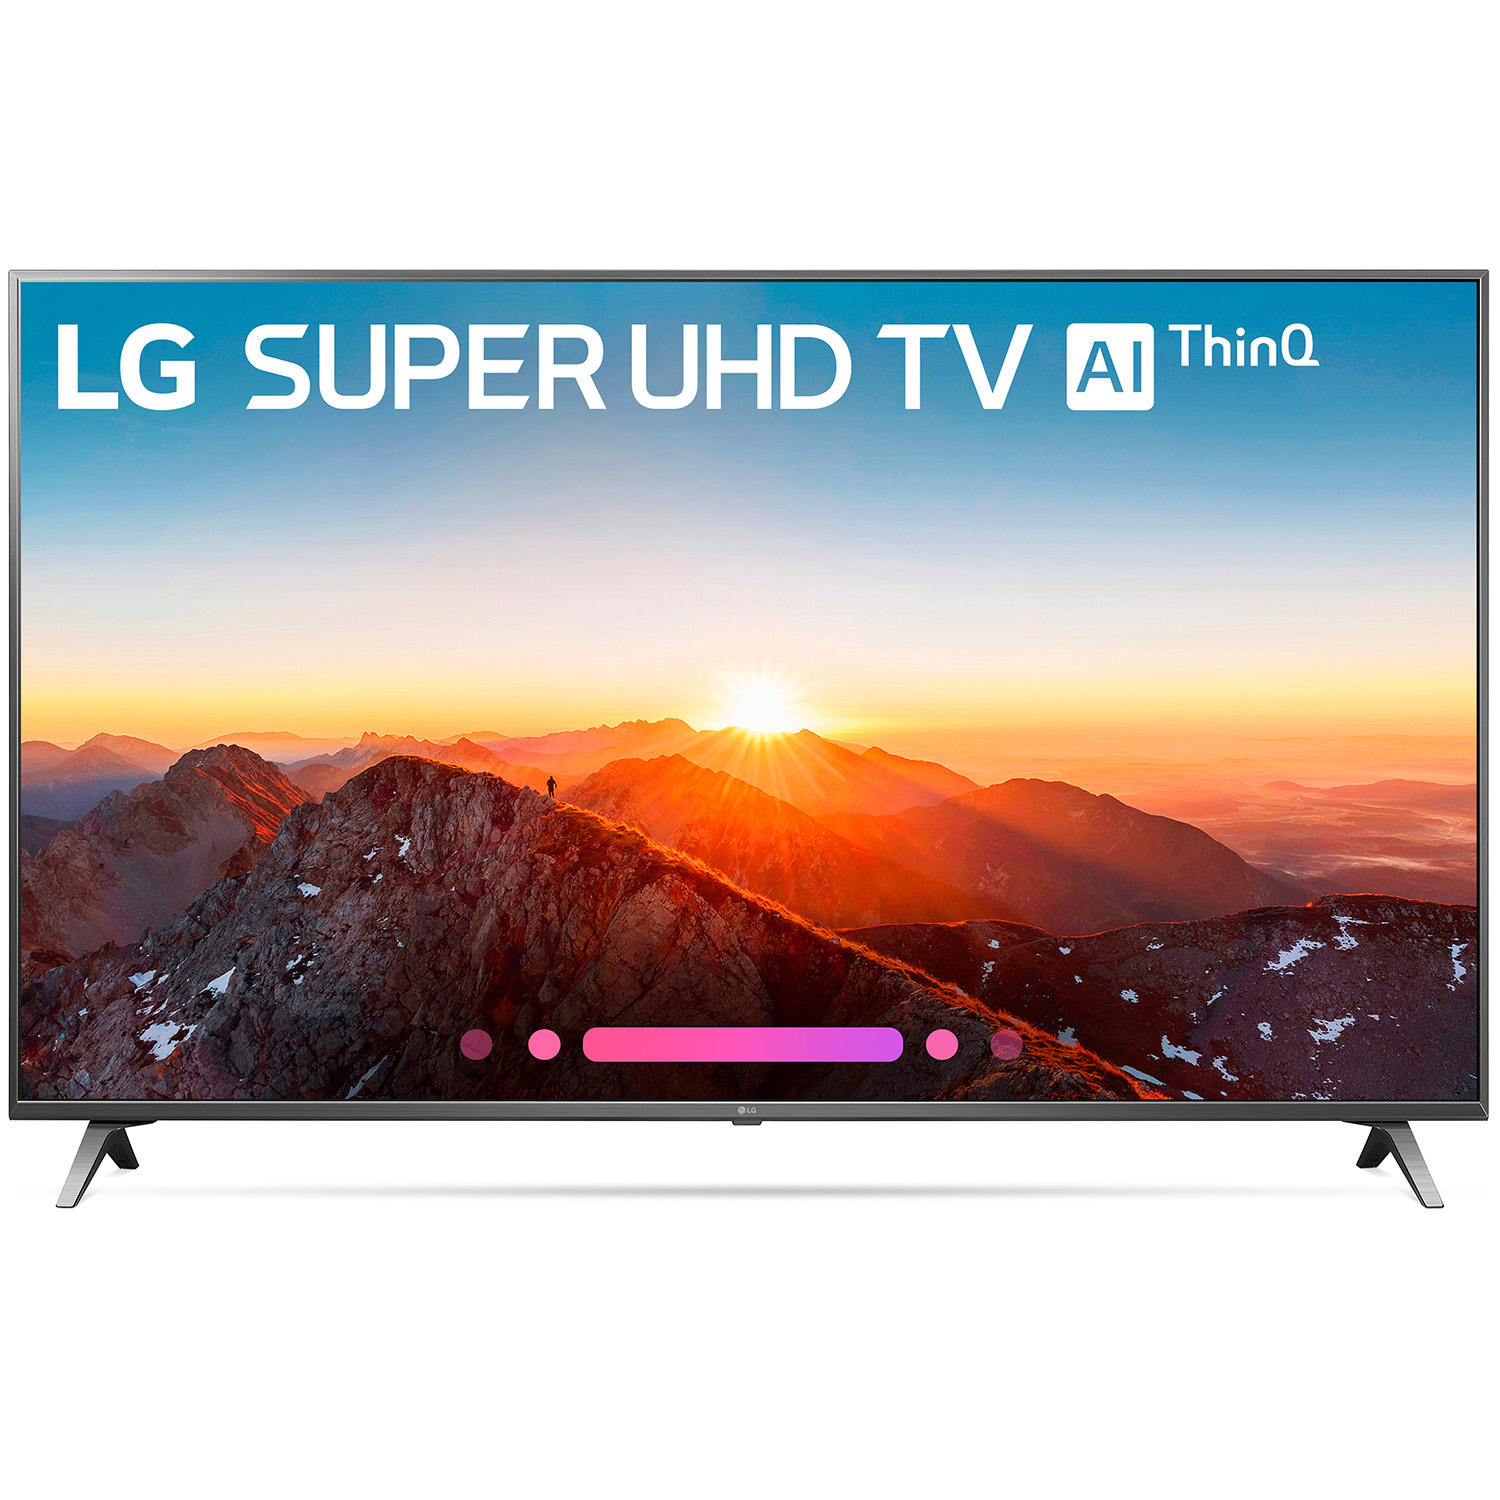 LG 55SK8000AUB 55″ 4K HDR Smart LED Super UHD TV with AI ThinQ